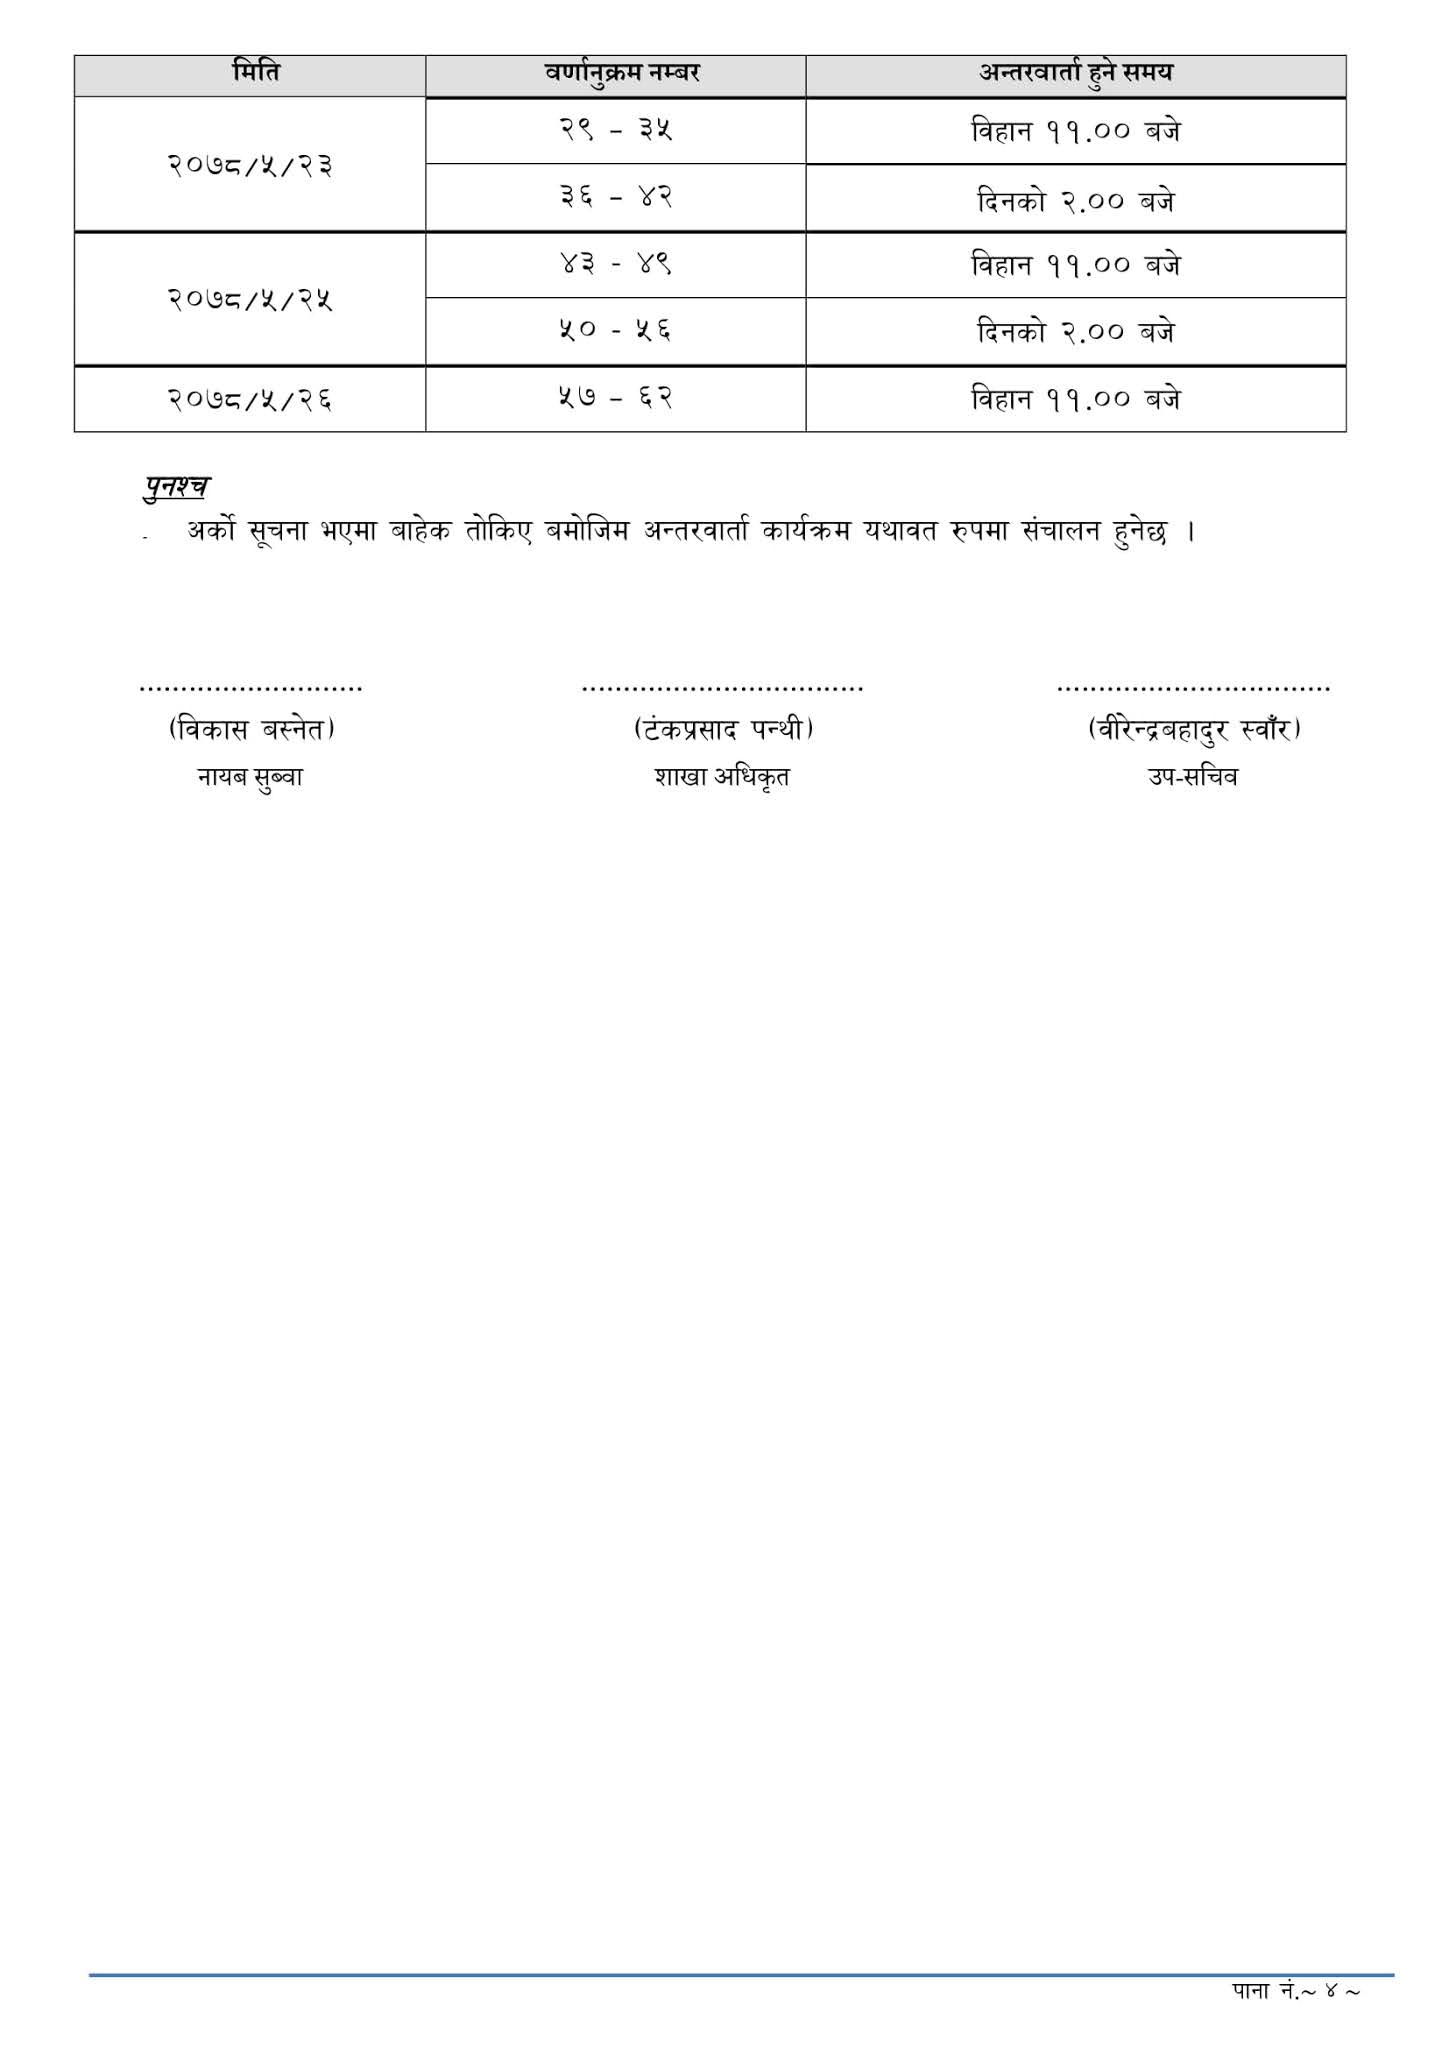 NASU Revenue (Rajashwo) - Dhankuta Lok Sewa Aayog Written Exam Result & Exam Schedule